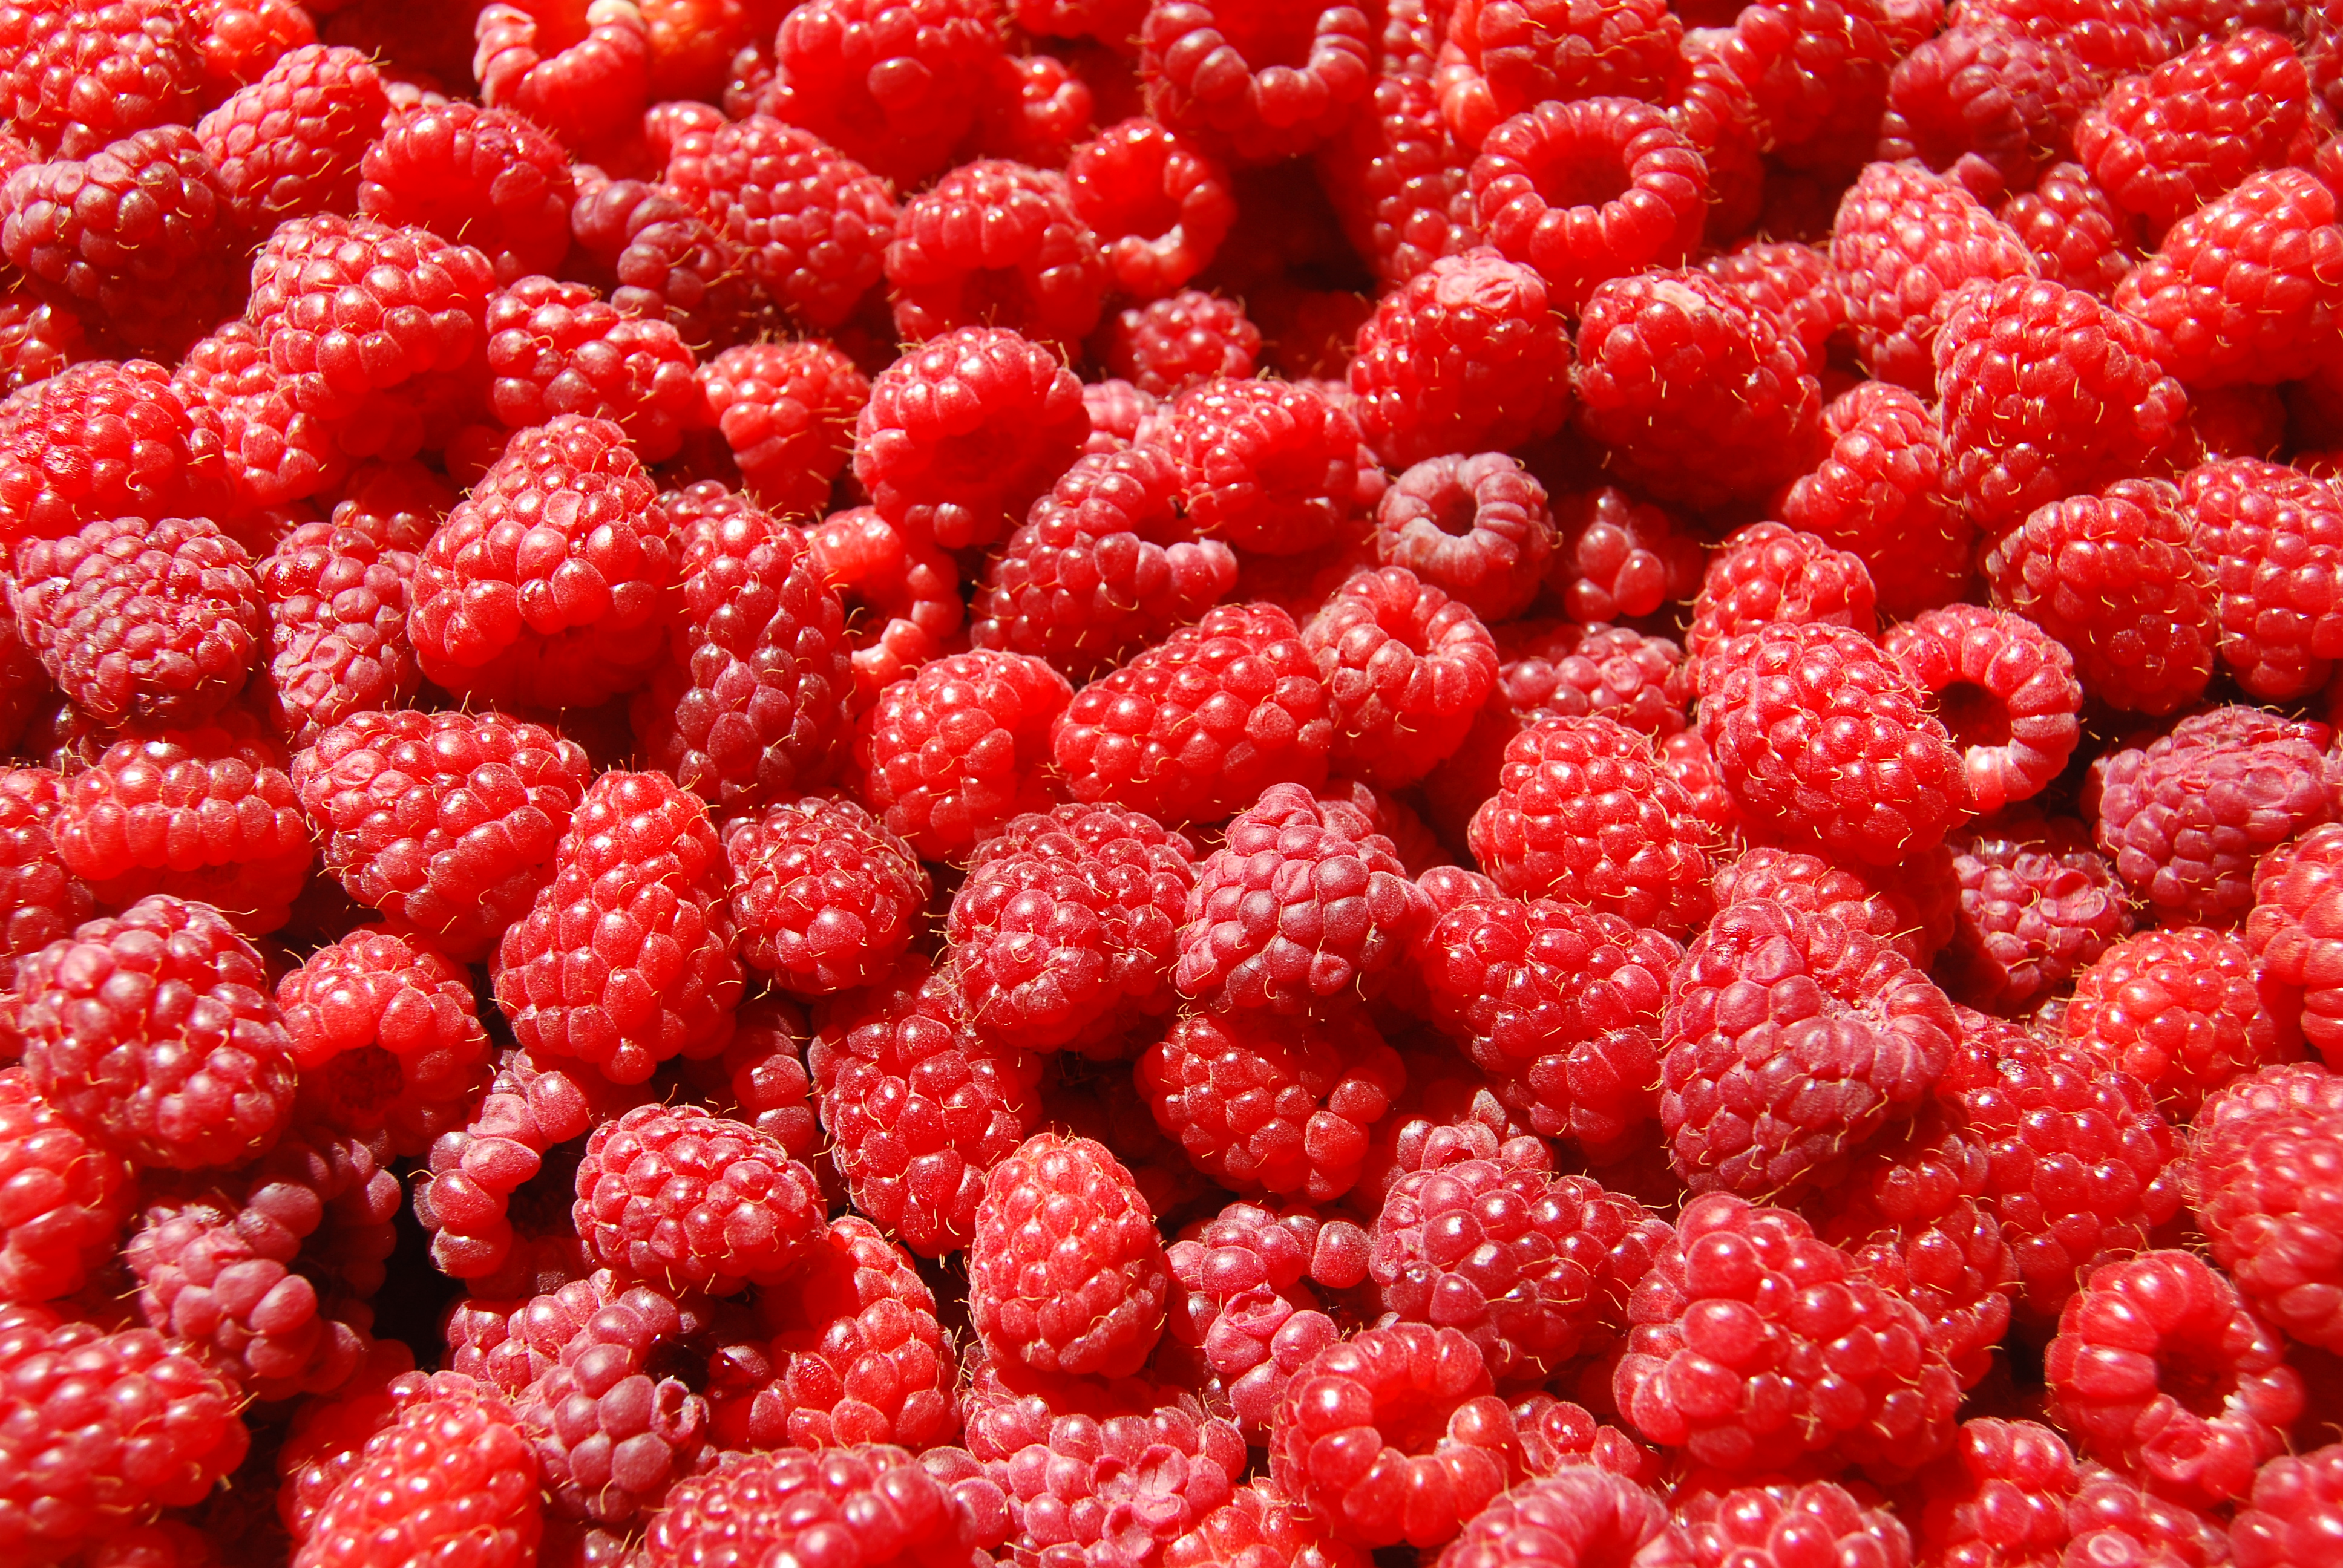 Many, many raspberries.